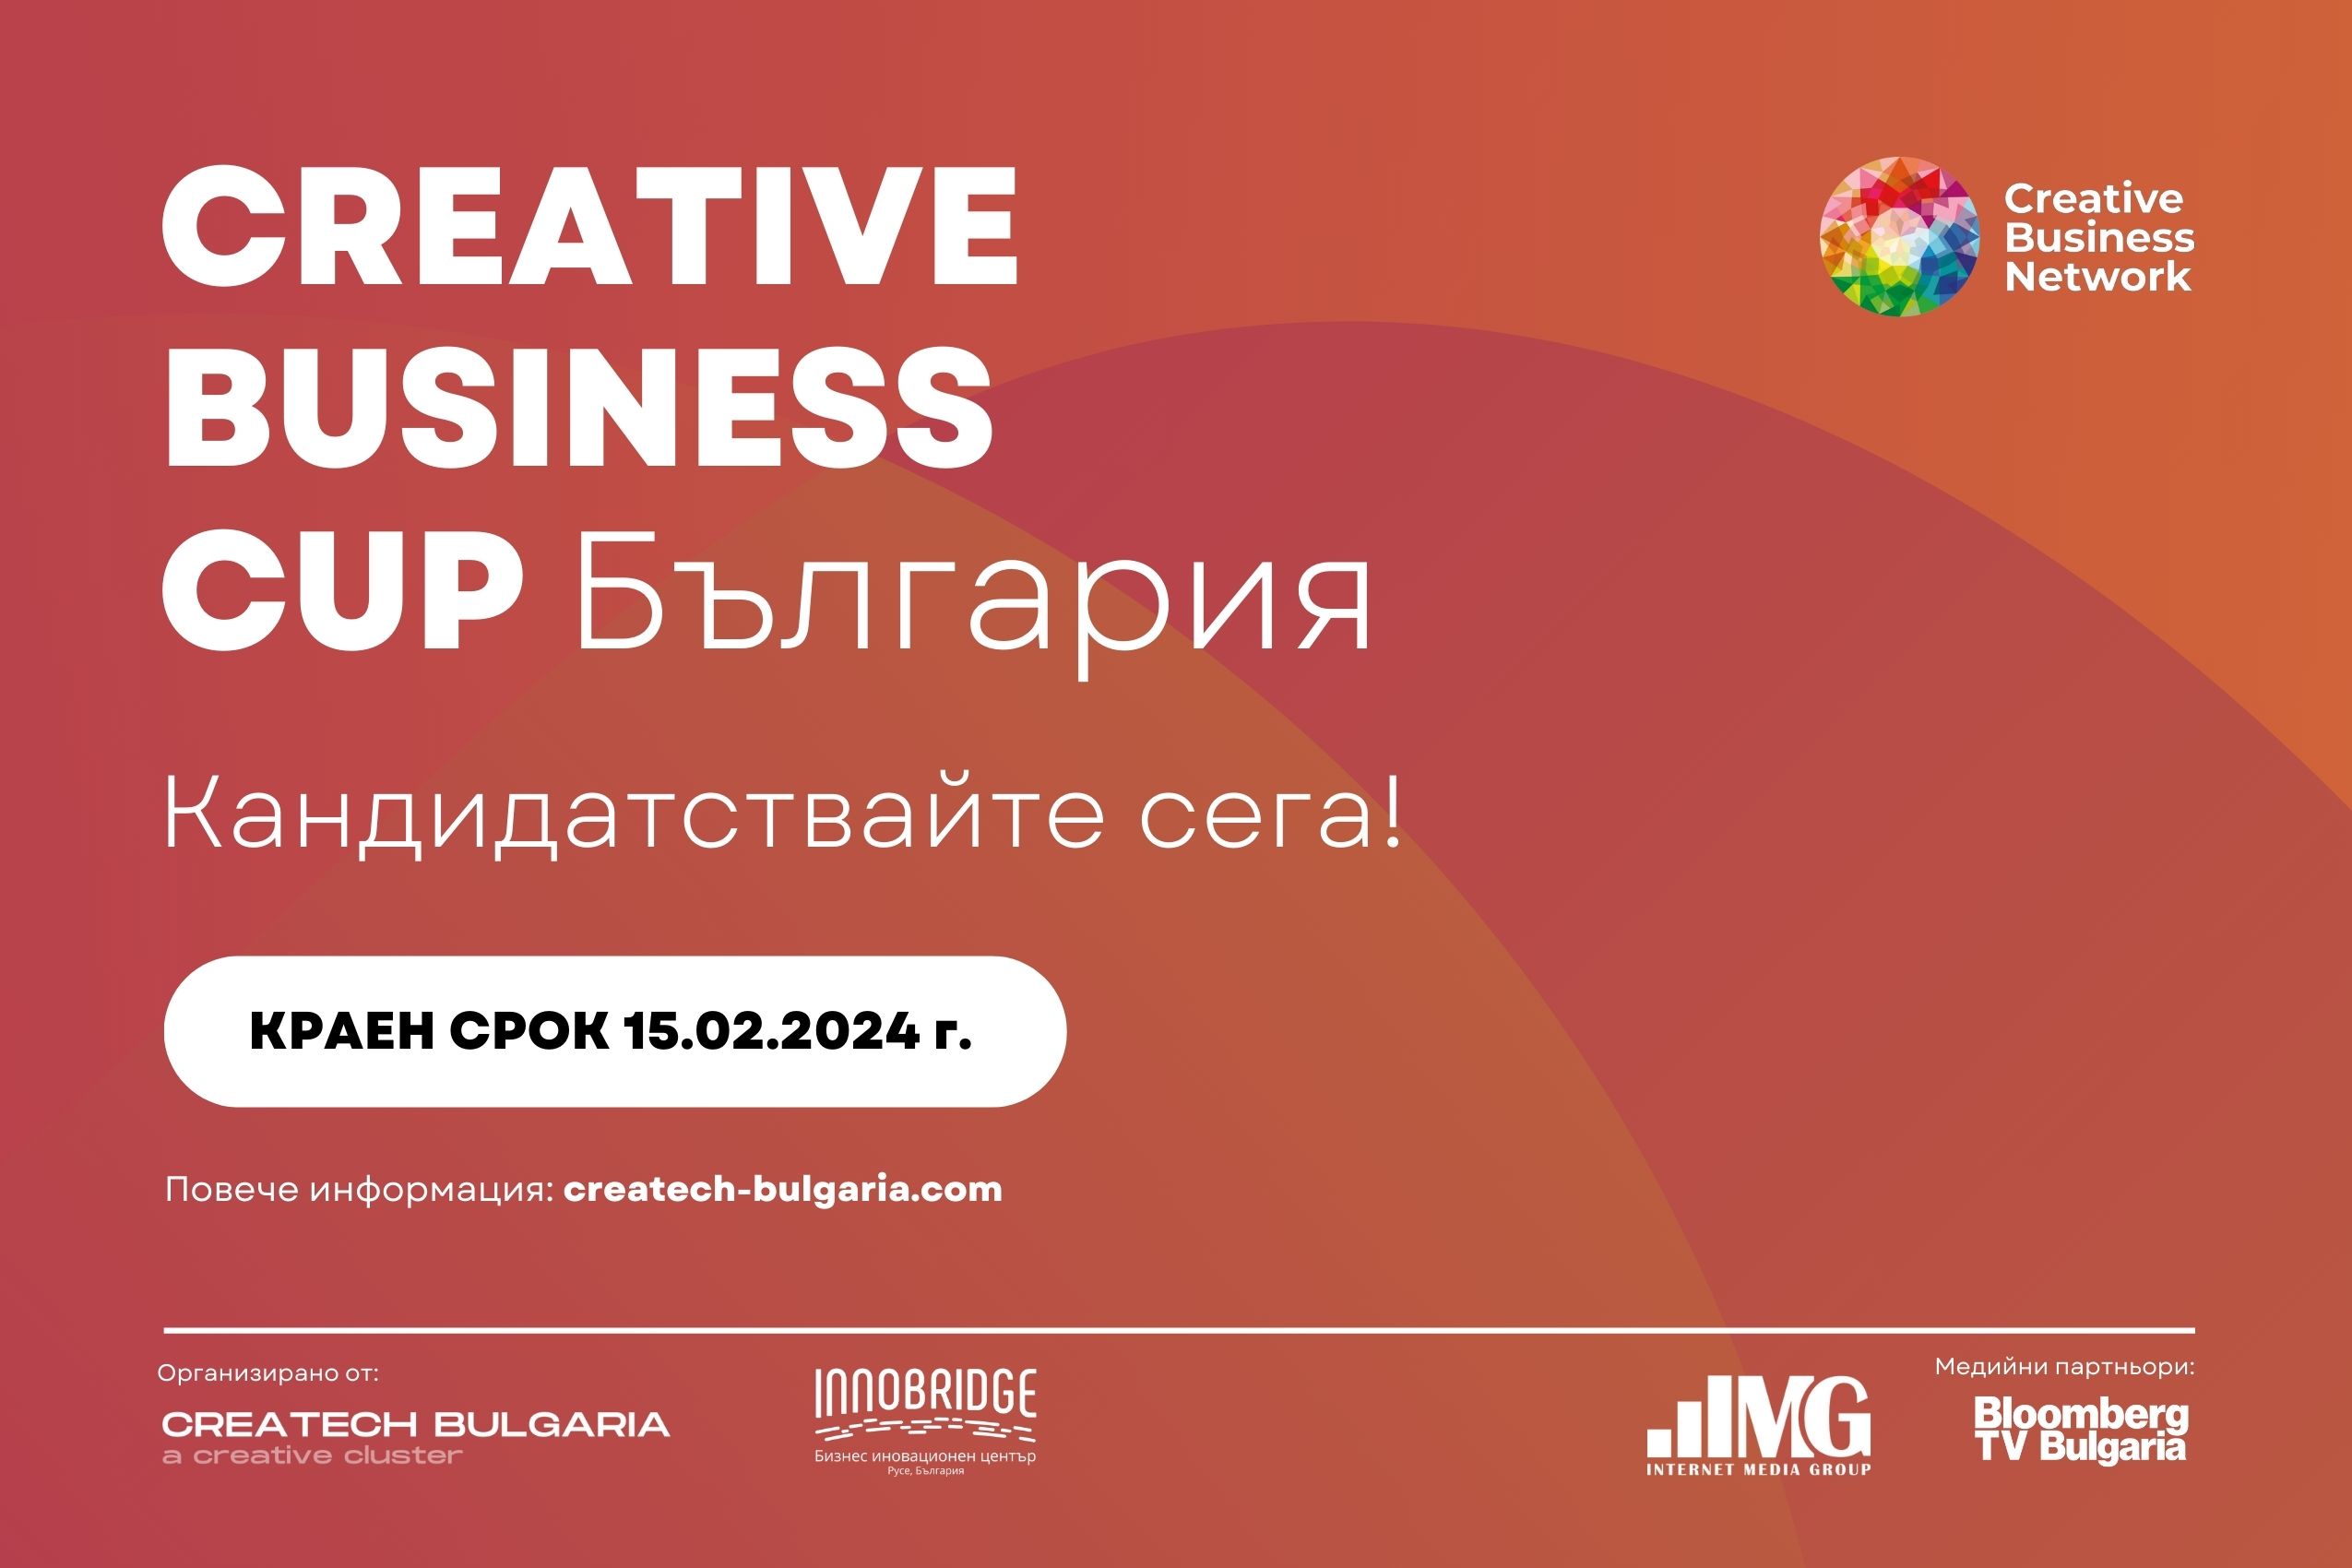 CREATIVE BUSINESS CUP BULGARIA 2024